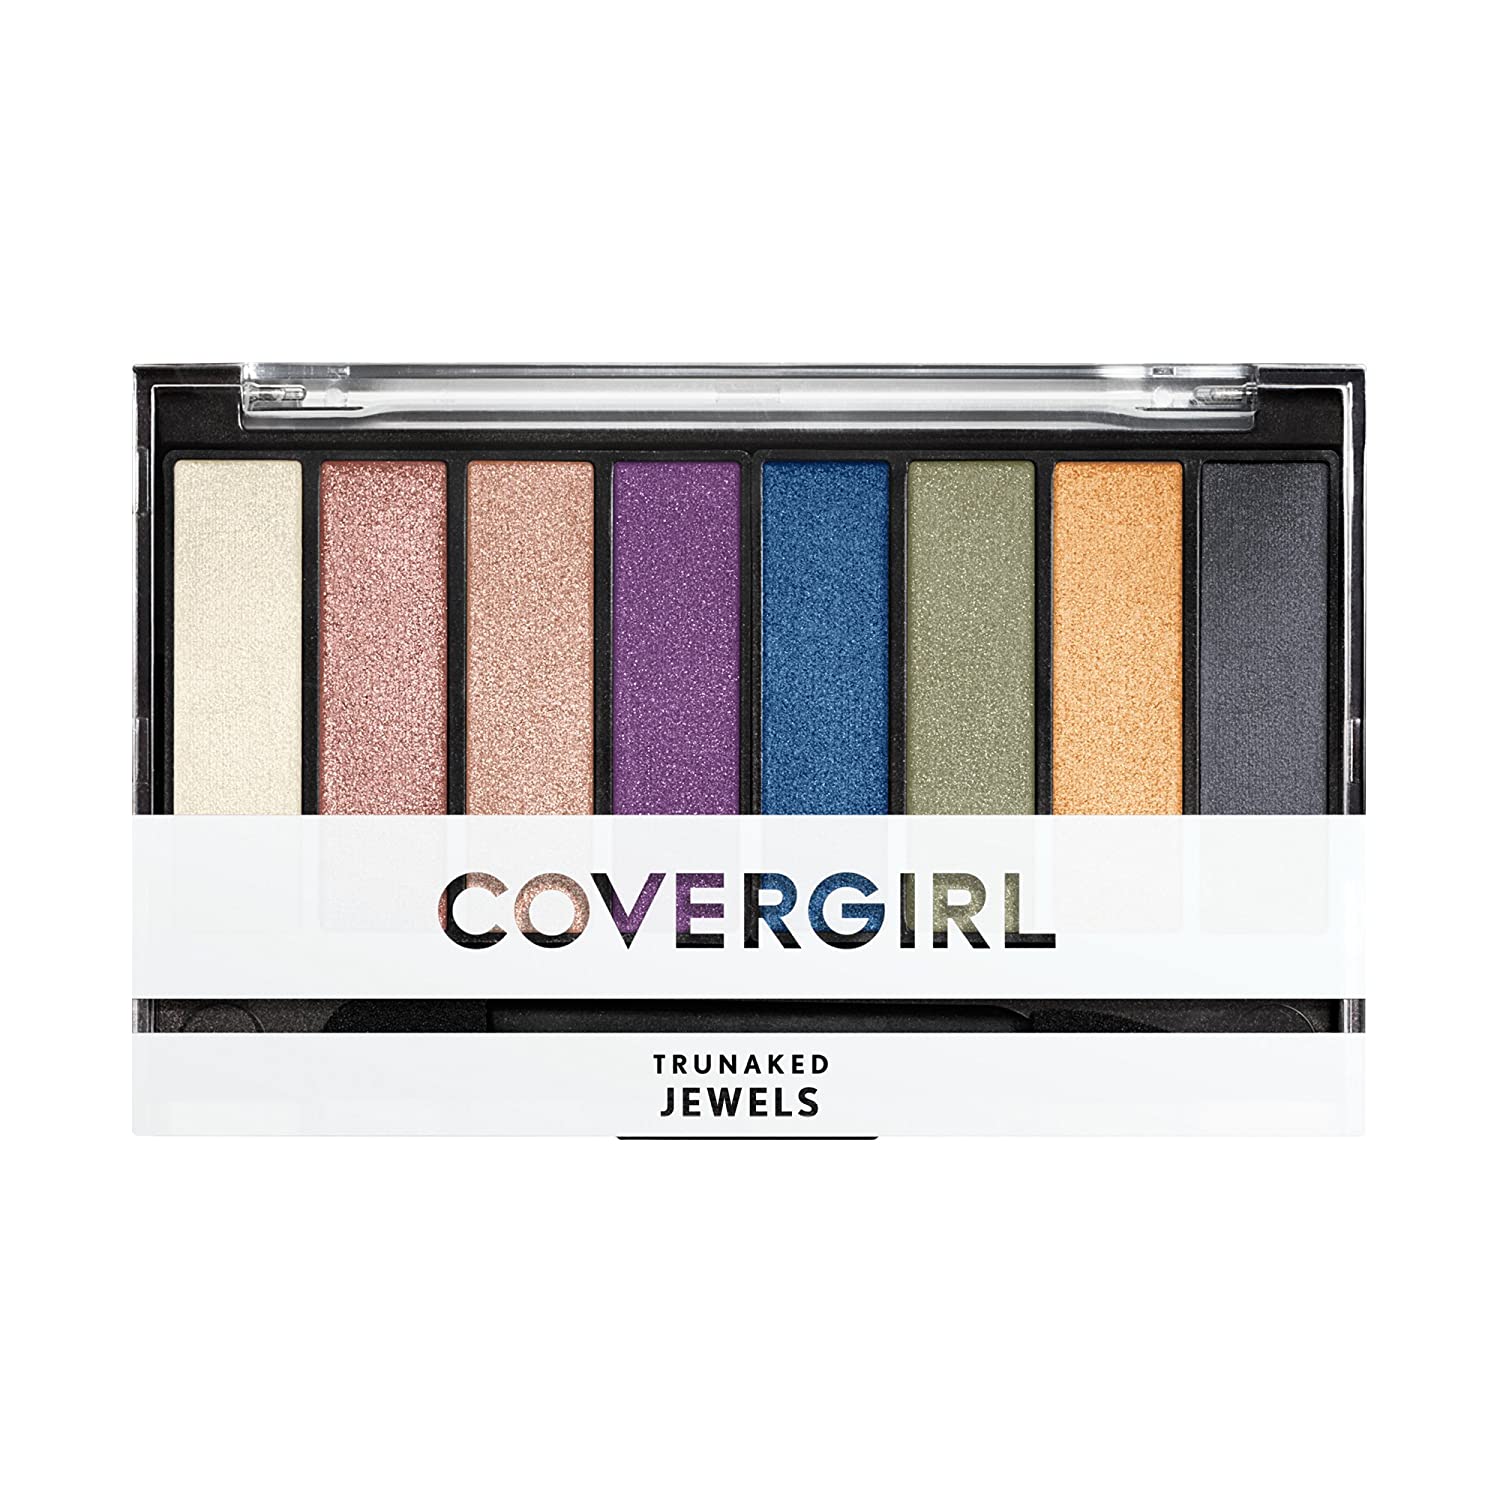 CoverGirl Trunaked Jewels Eyeshadow Palette - 0.23 Oz (9 g)